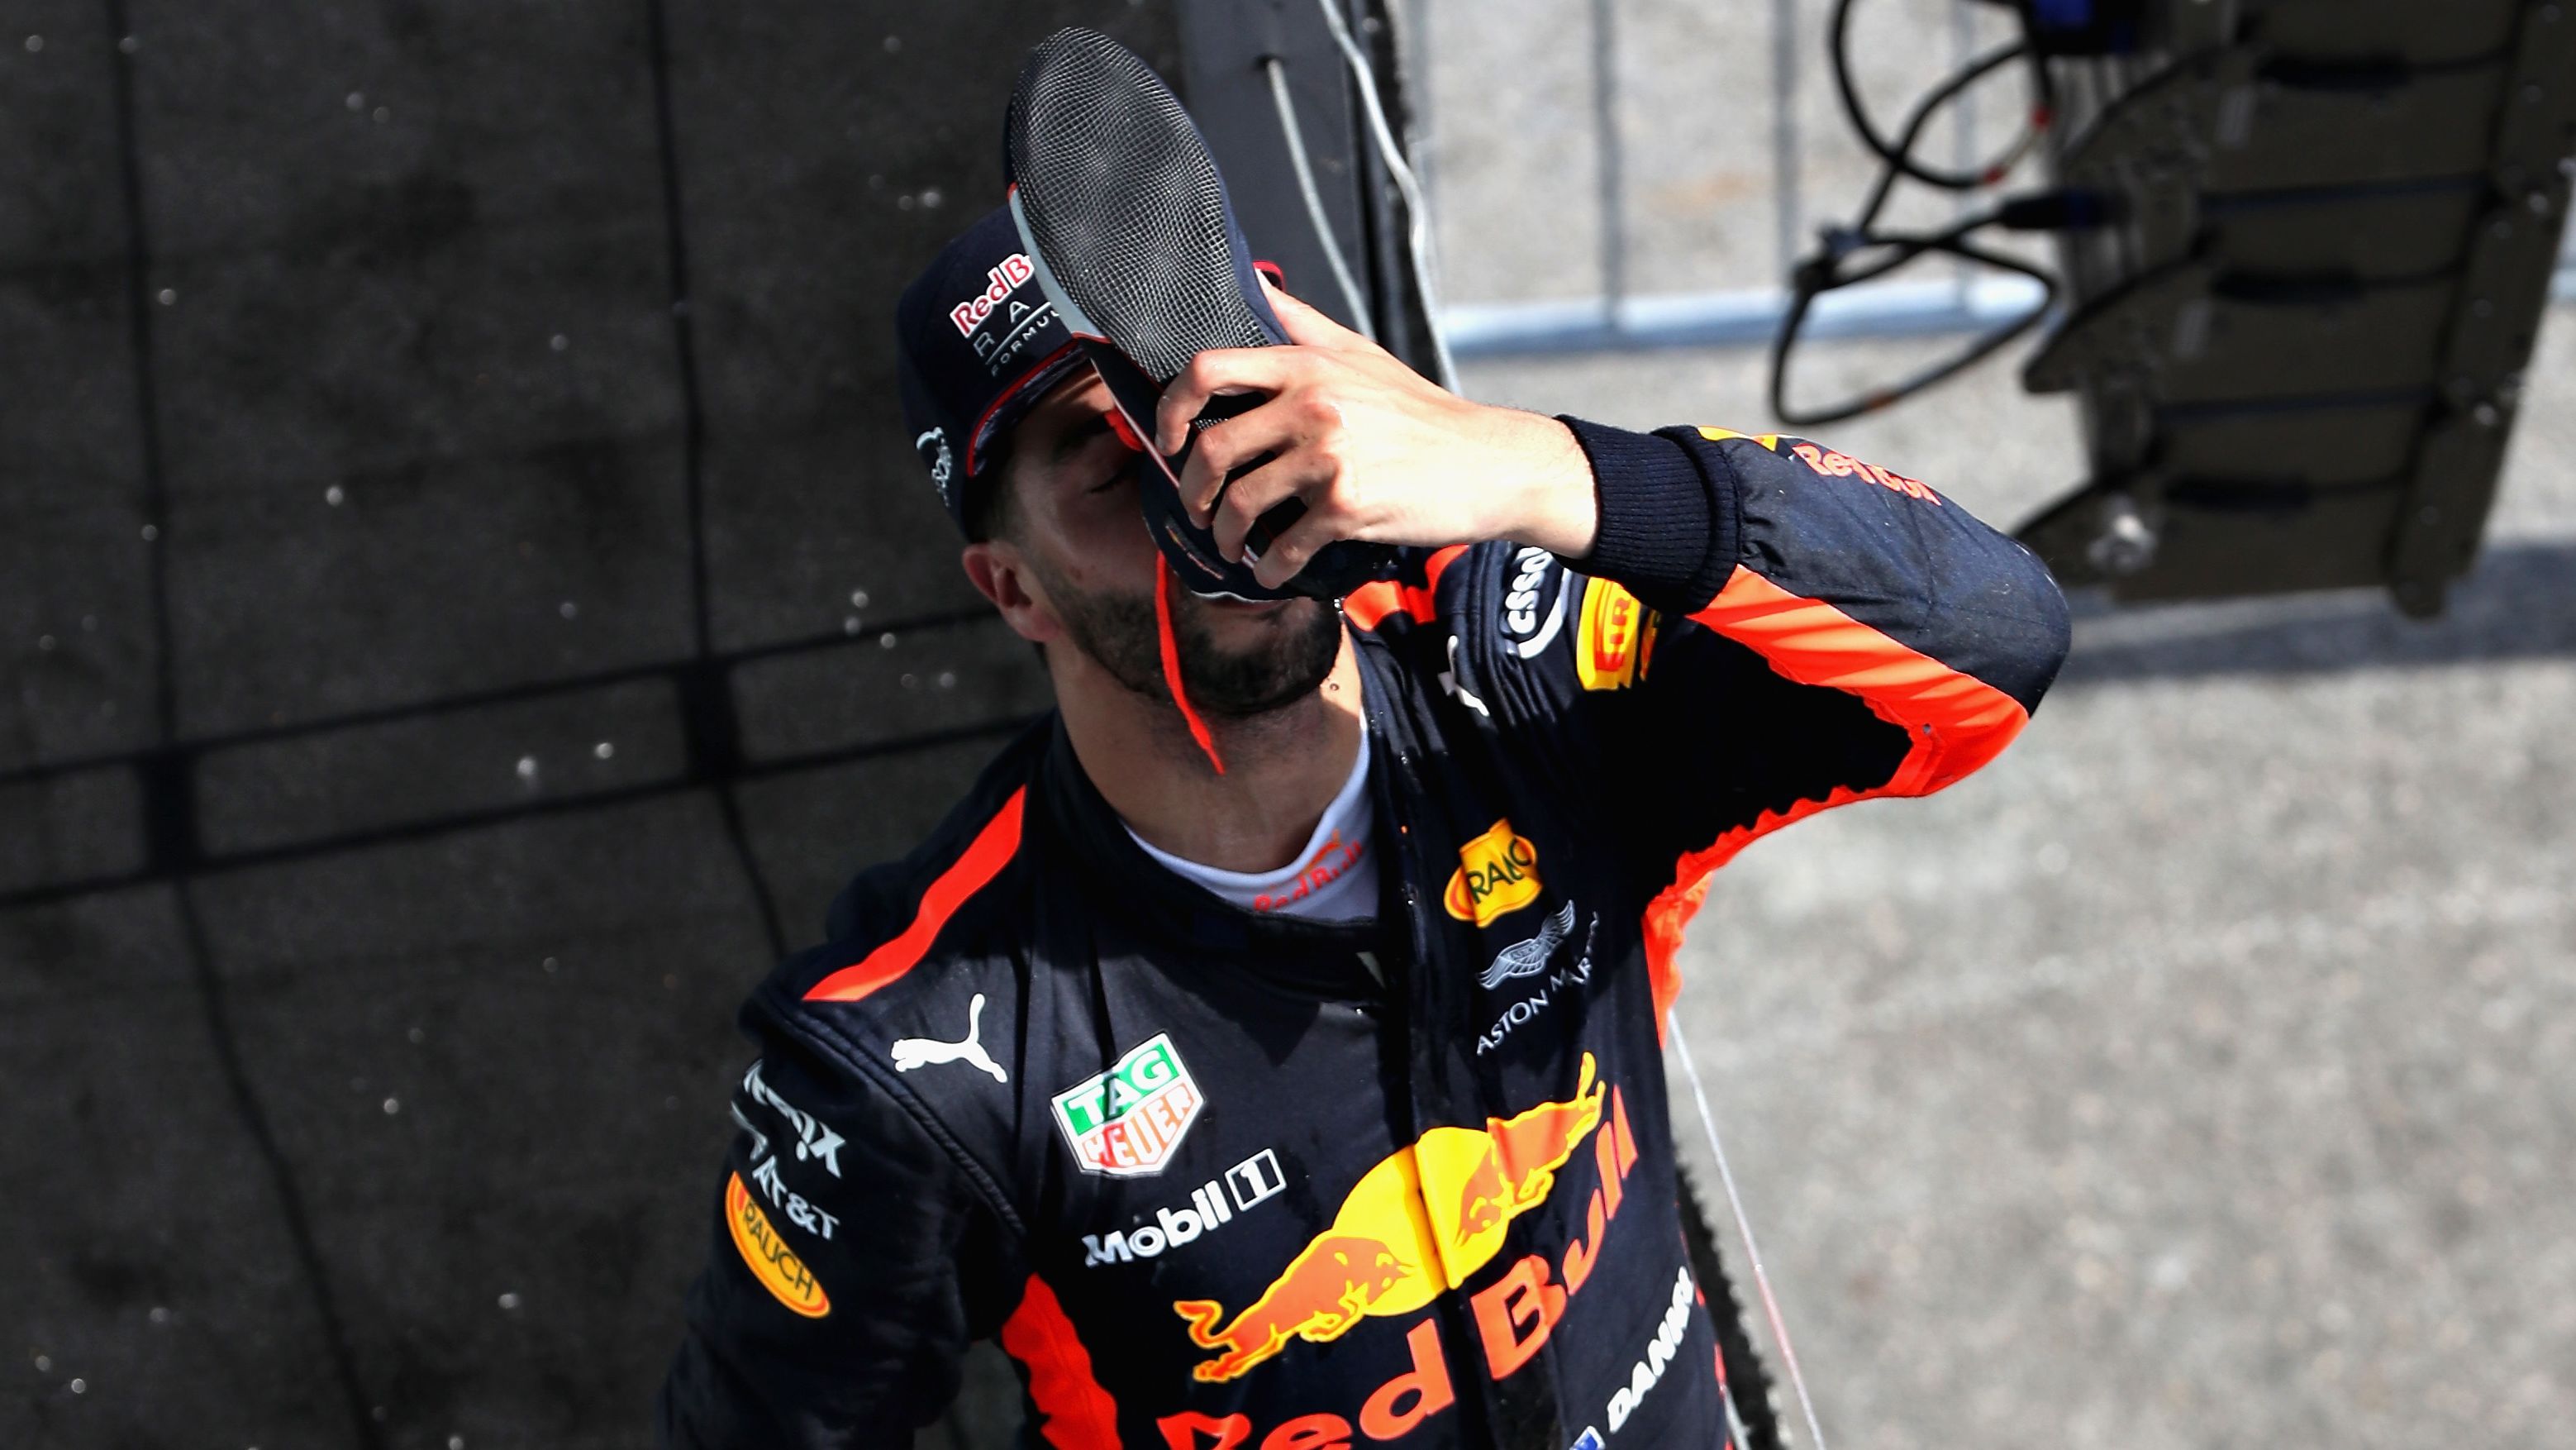 Daniel Ricciardo reprises his "shoey" celebration on the podium in Montreal.